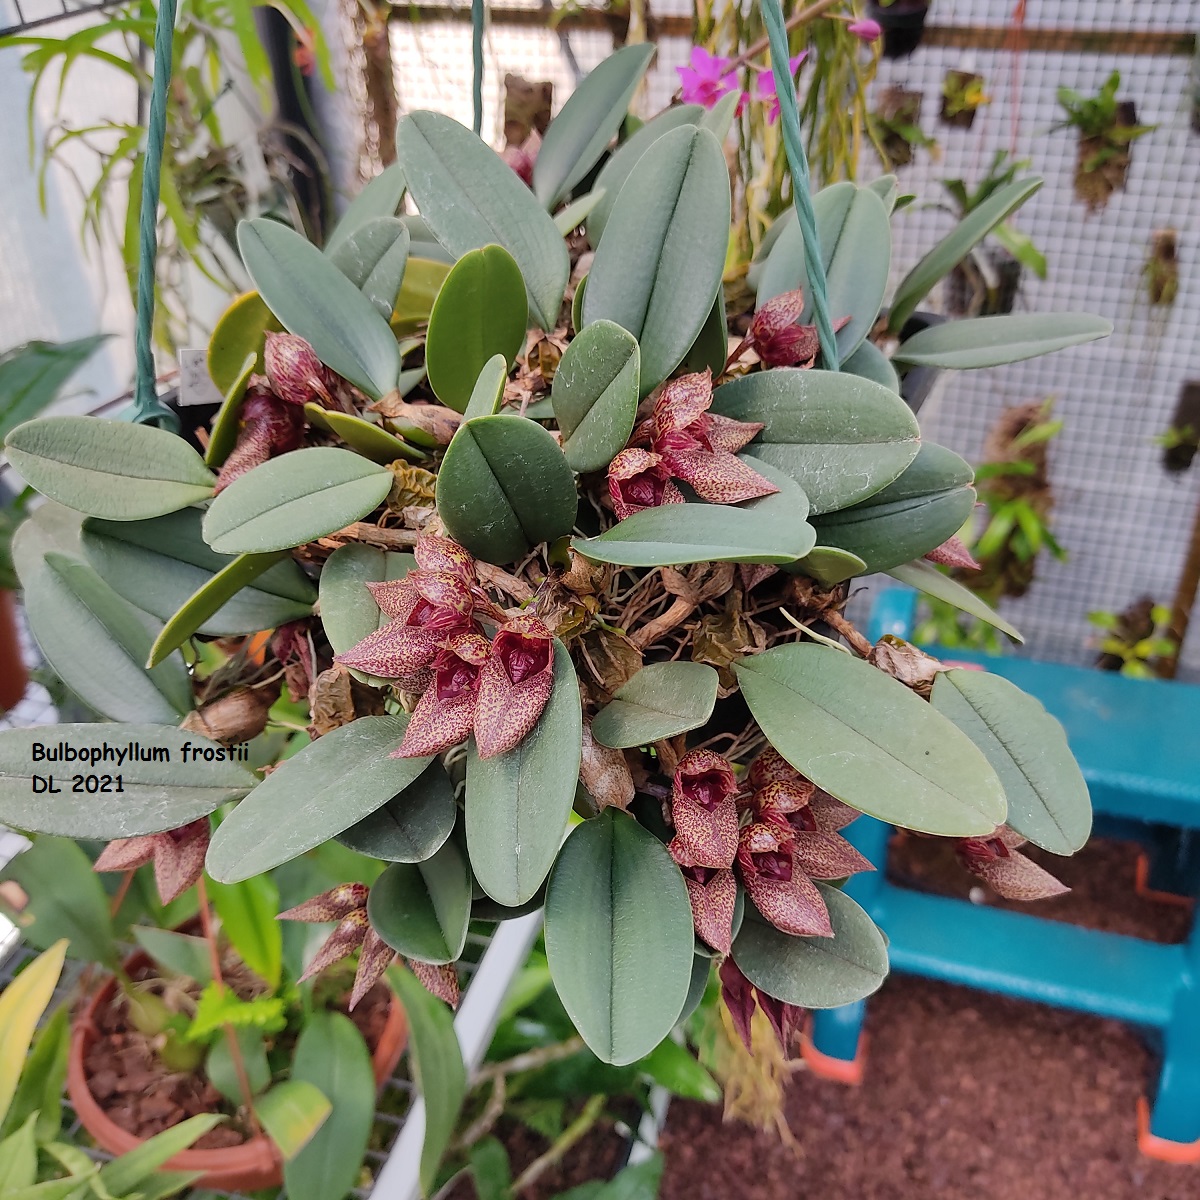 Bulbophyllum frostii IMG_20210701_122319